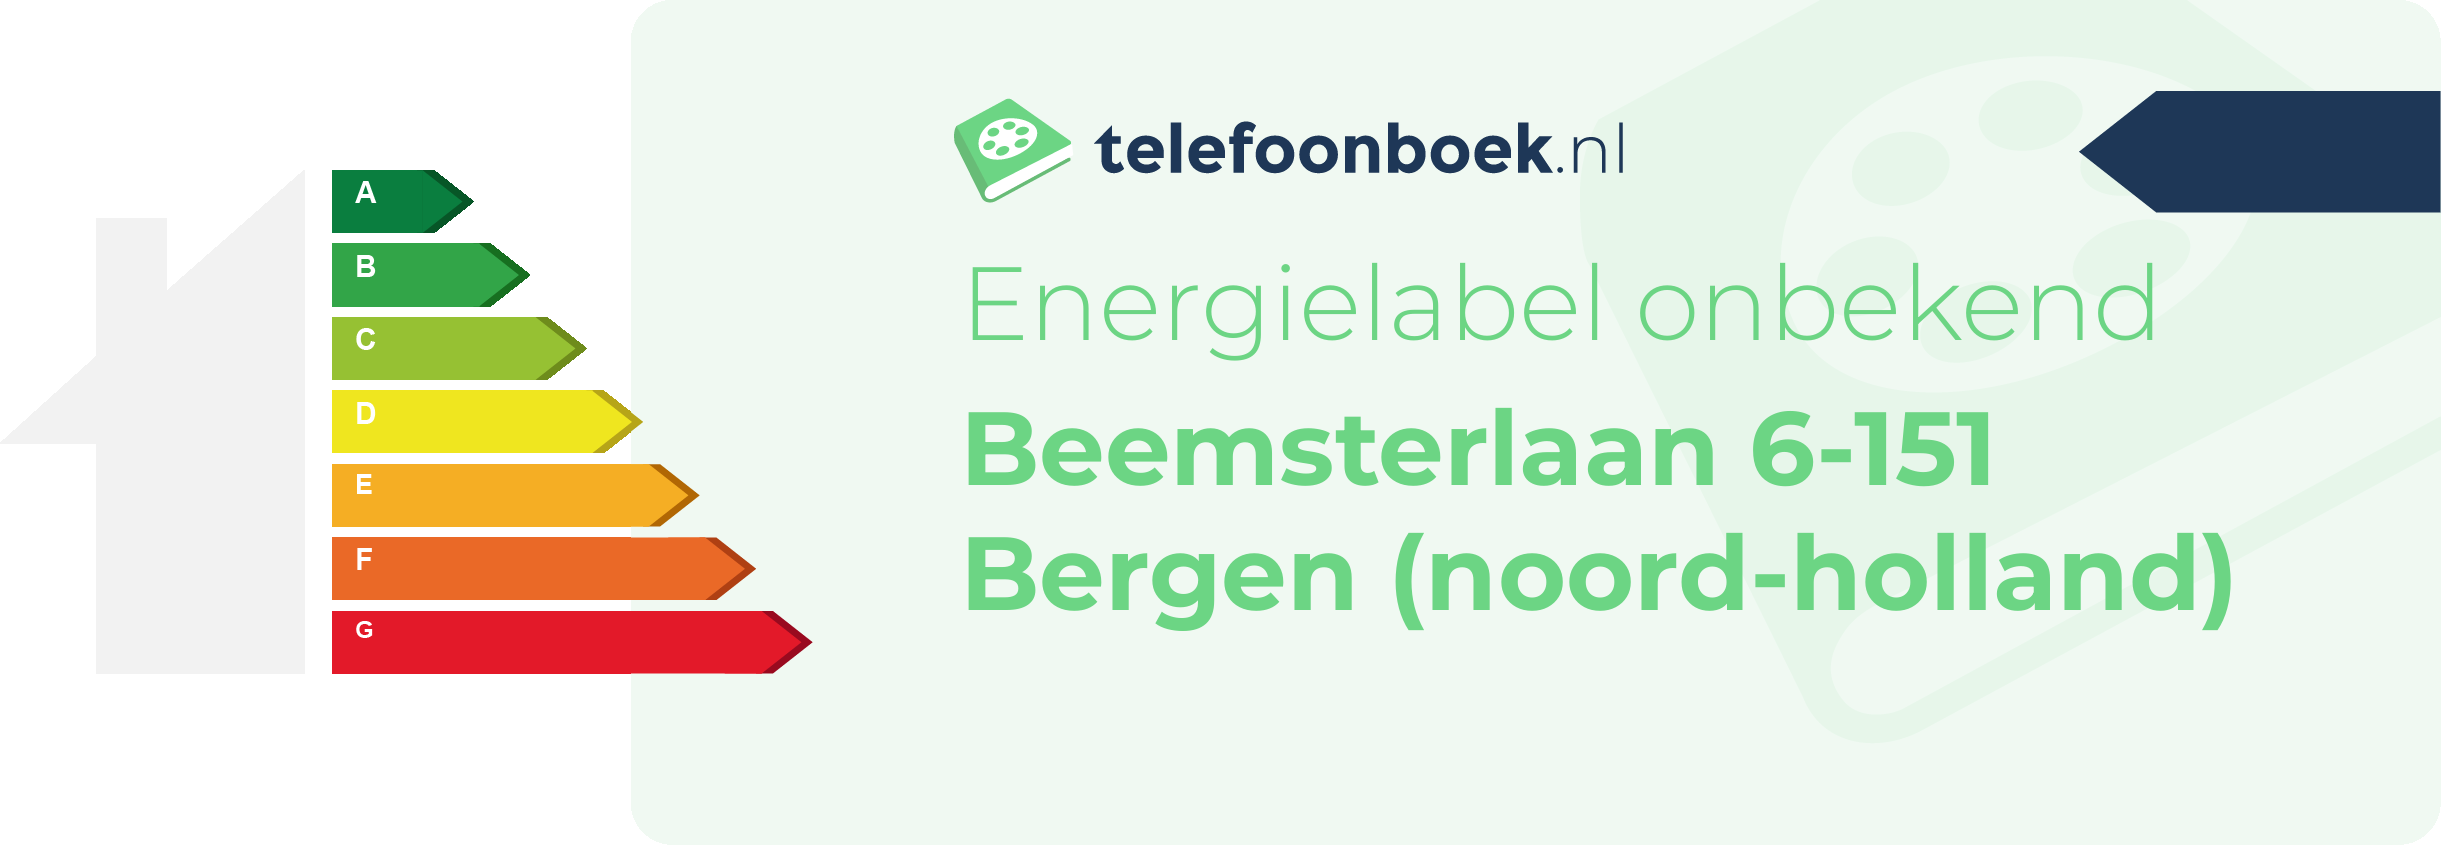 Energielabel Beemsterlaan 6-151 Bergen (Noord-Holland)